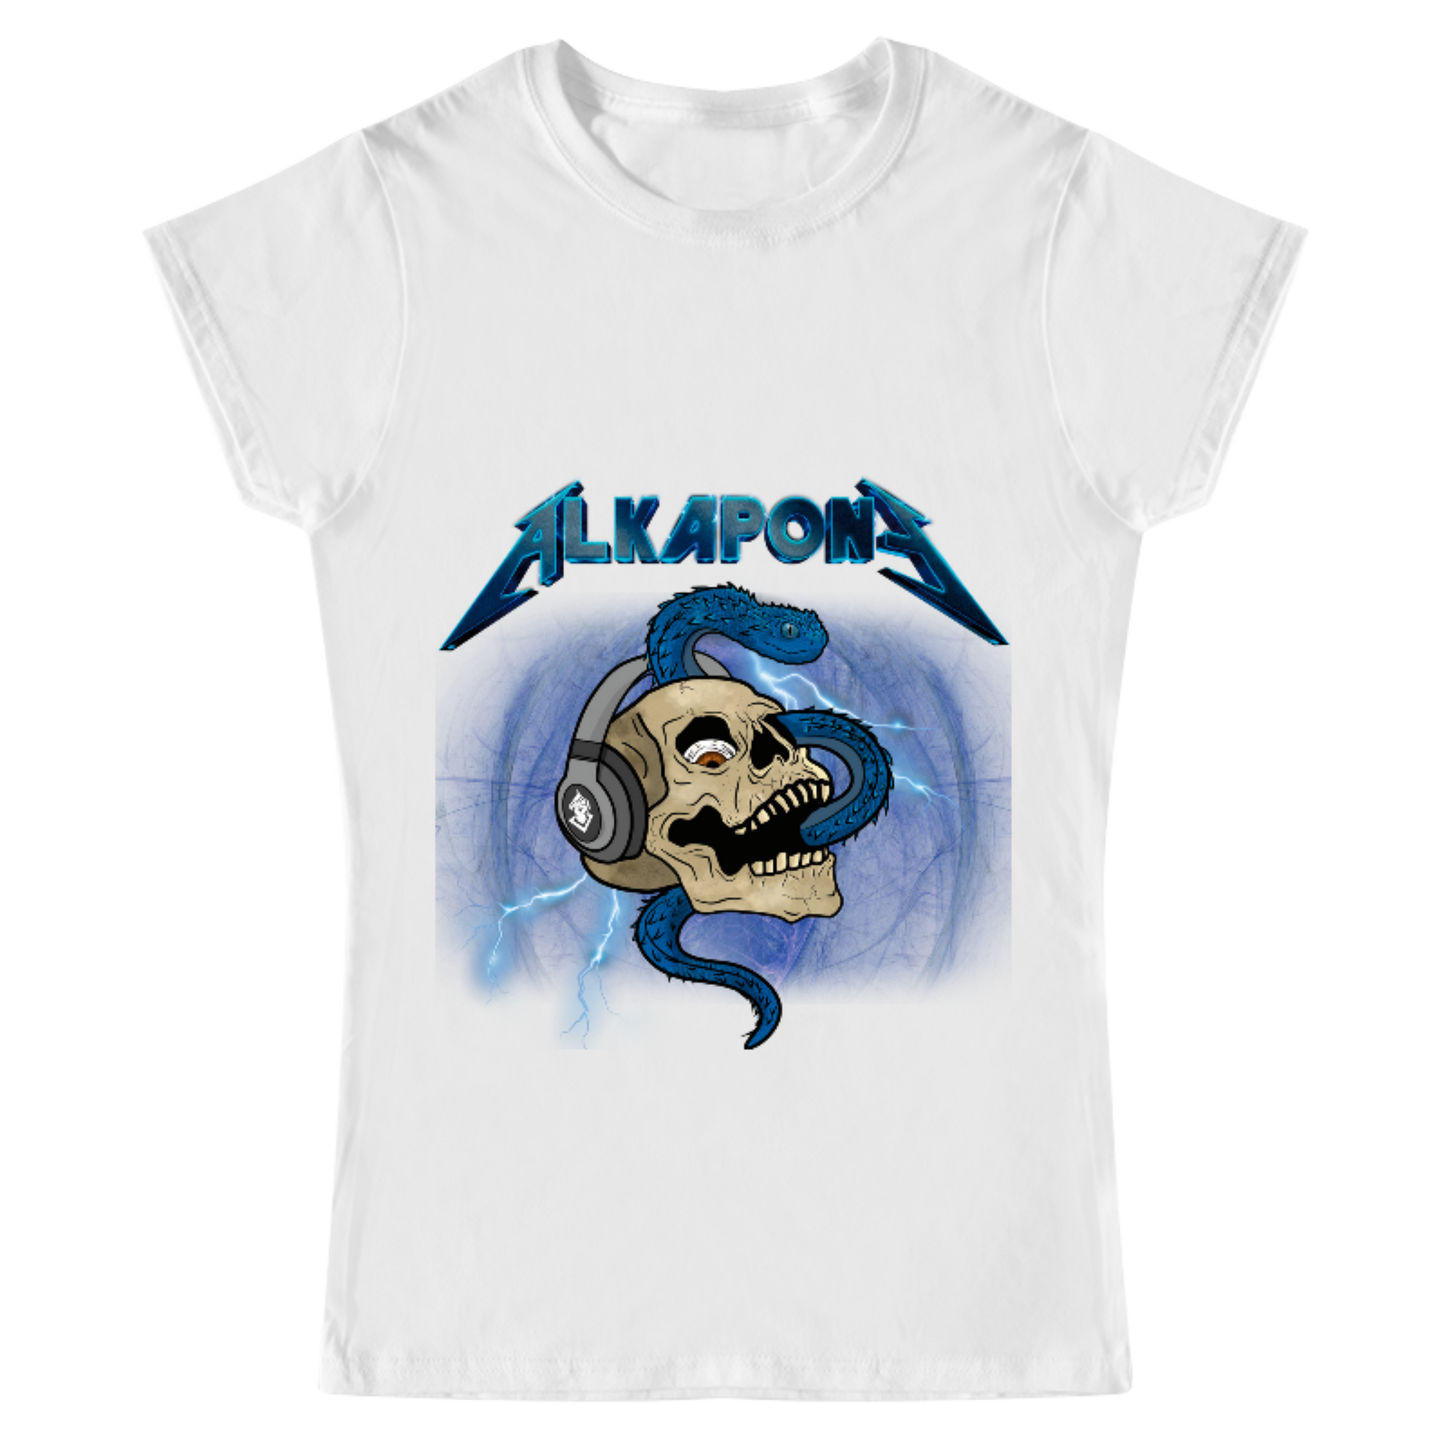 Women's T-shirt alkapone metallic lightning bolt with skull